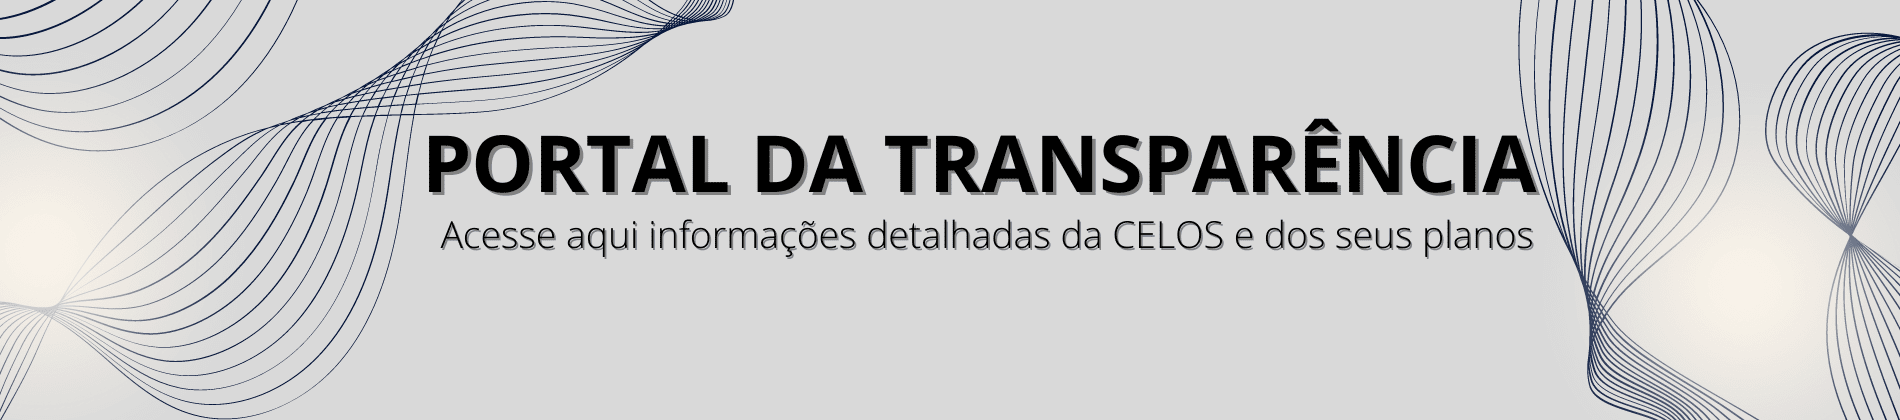 Banner_Portal_Transparencia